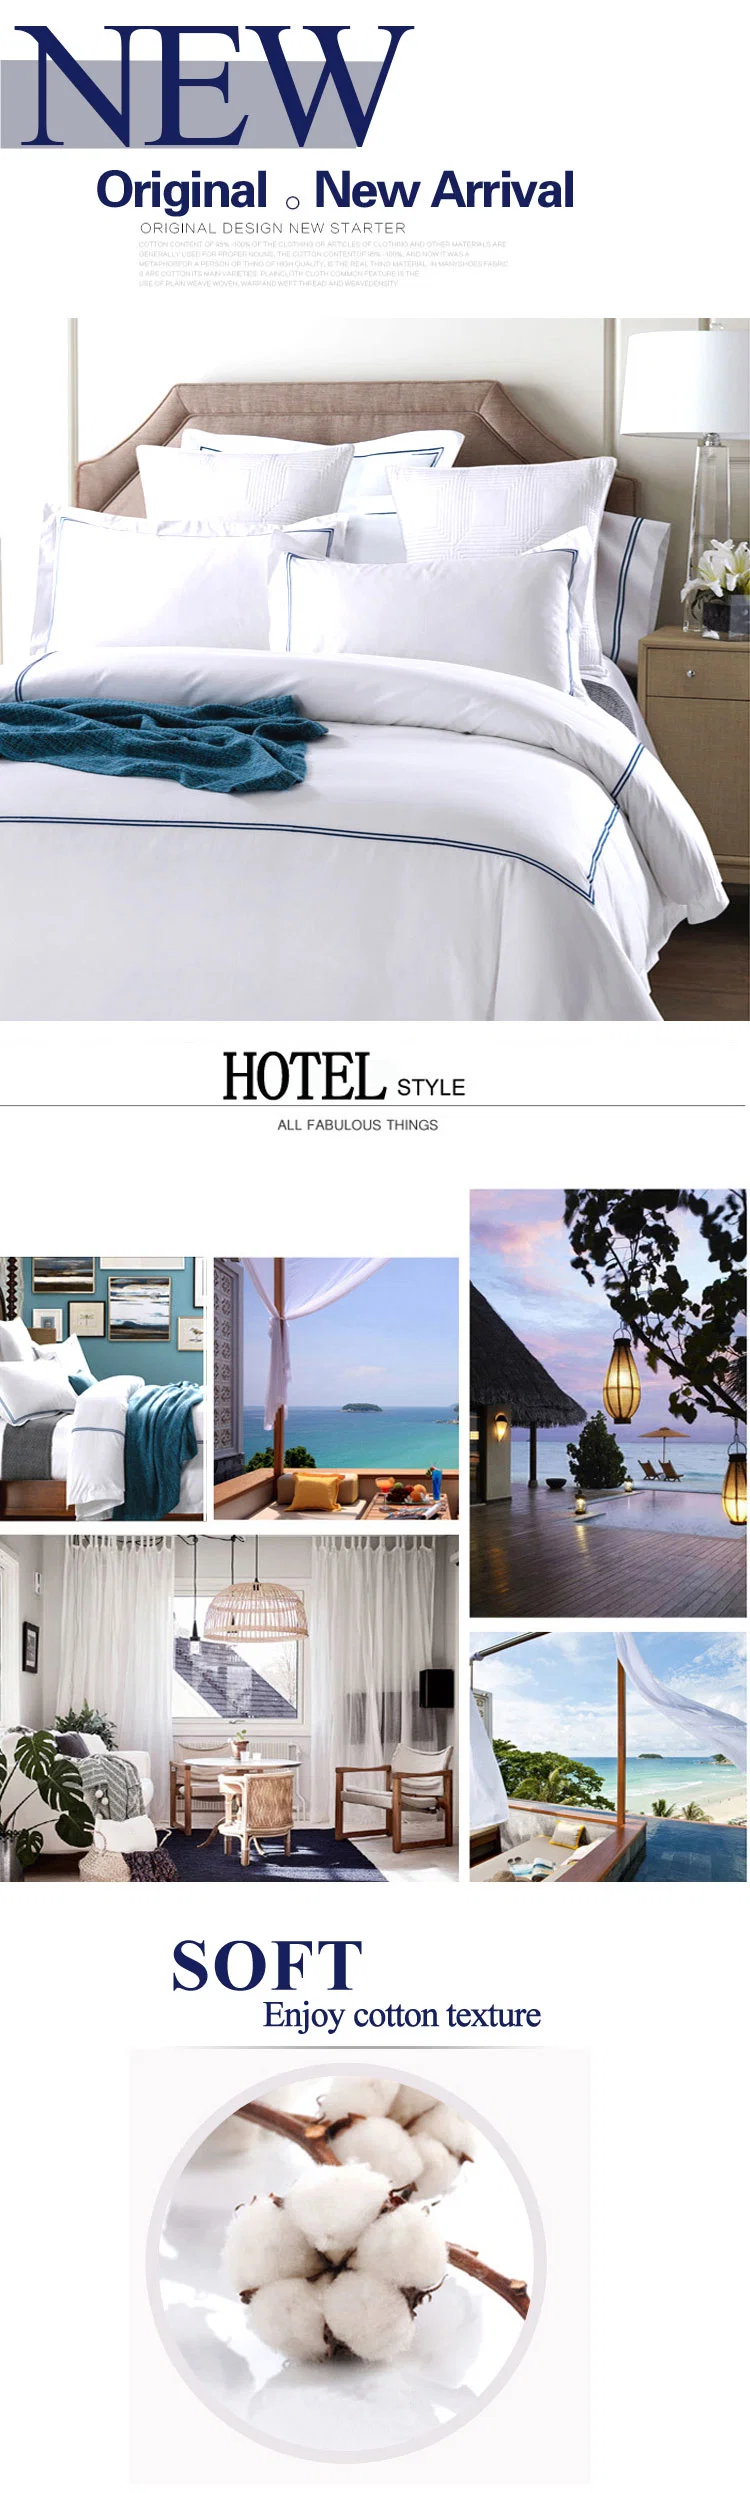 Yrf Marriott Hotel Bed Linen Bedsheets Bedding Sets